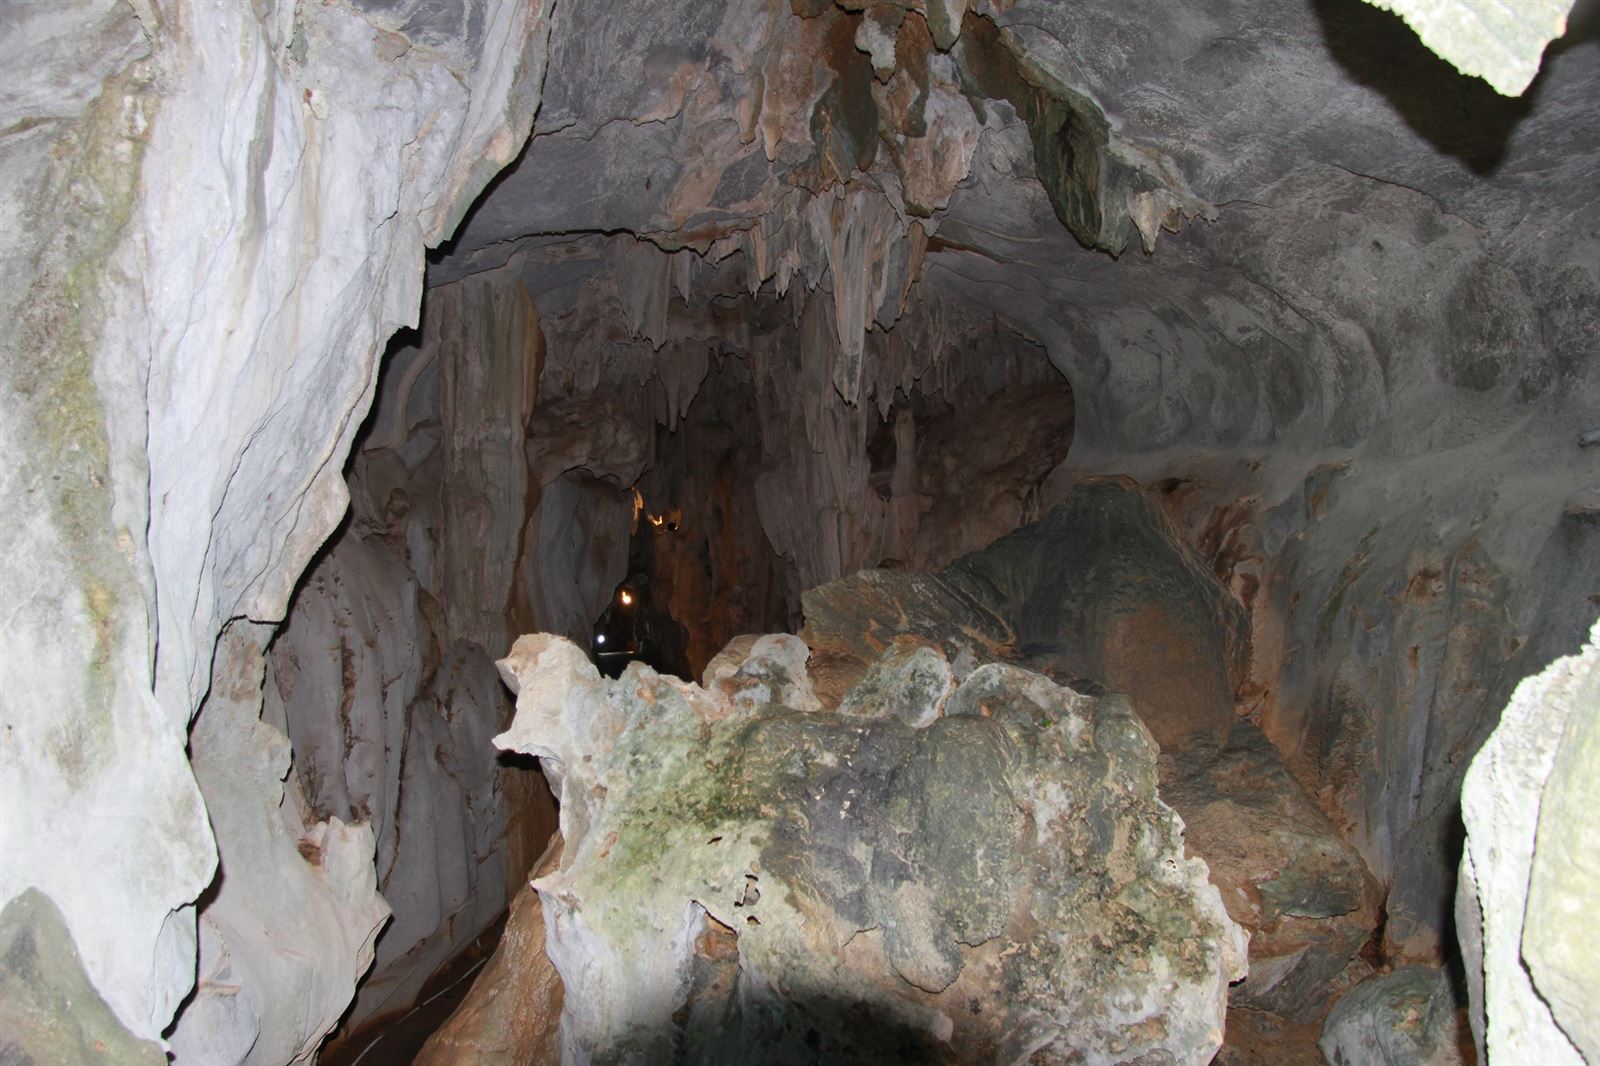 Trung TRang cave 2